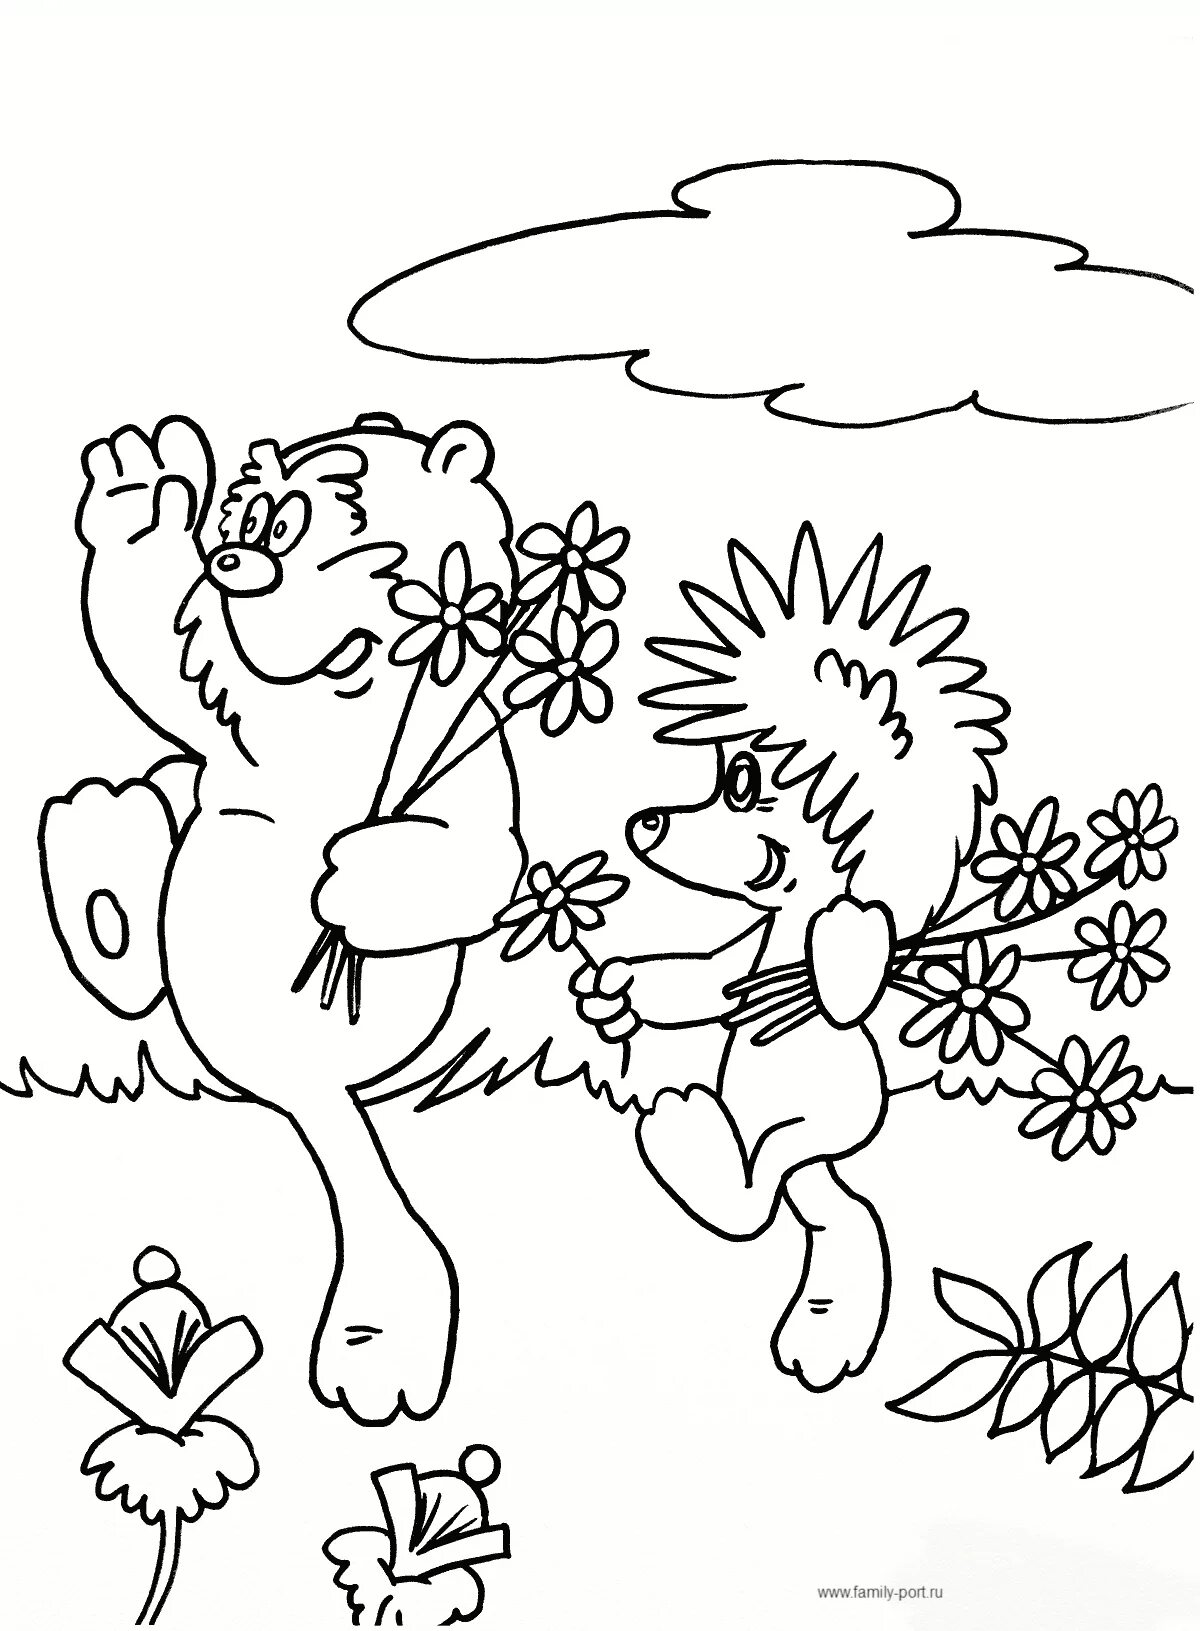 Hedgehog and bear cub #2